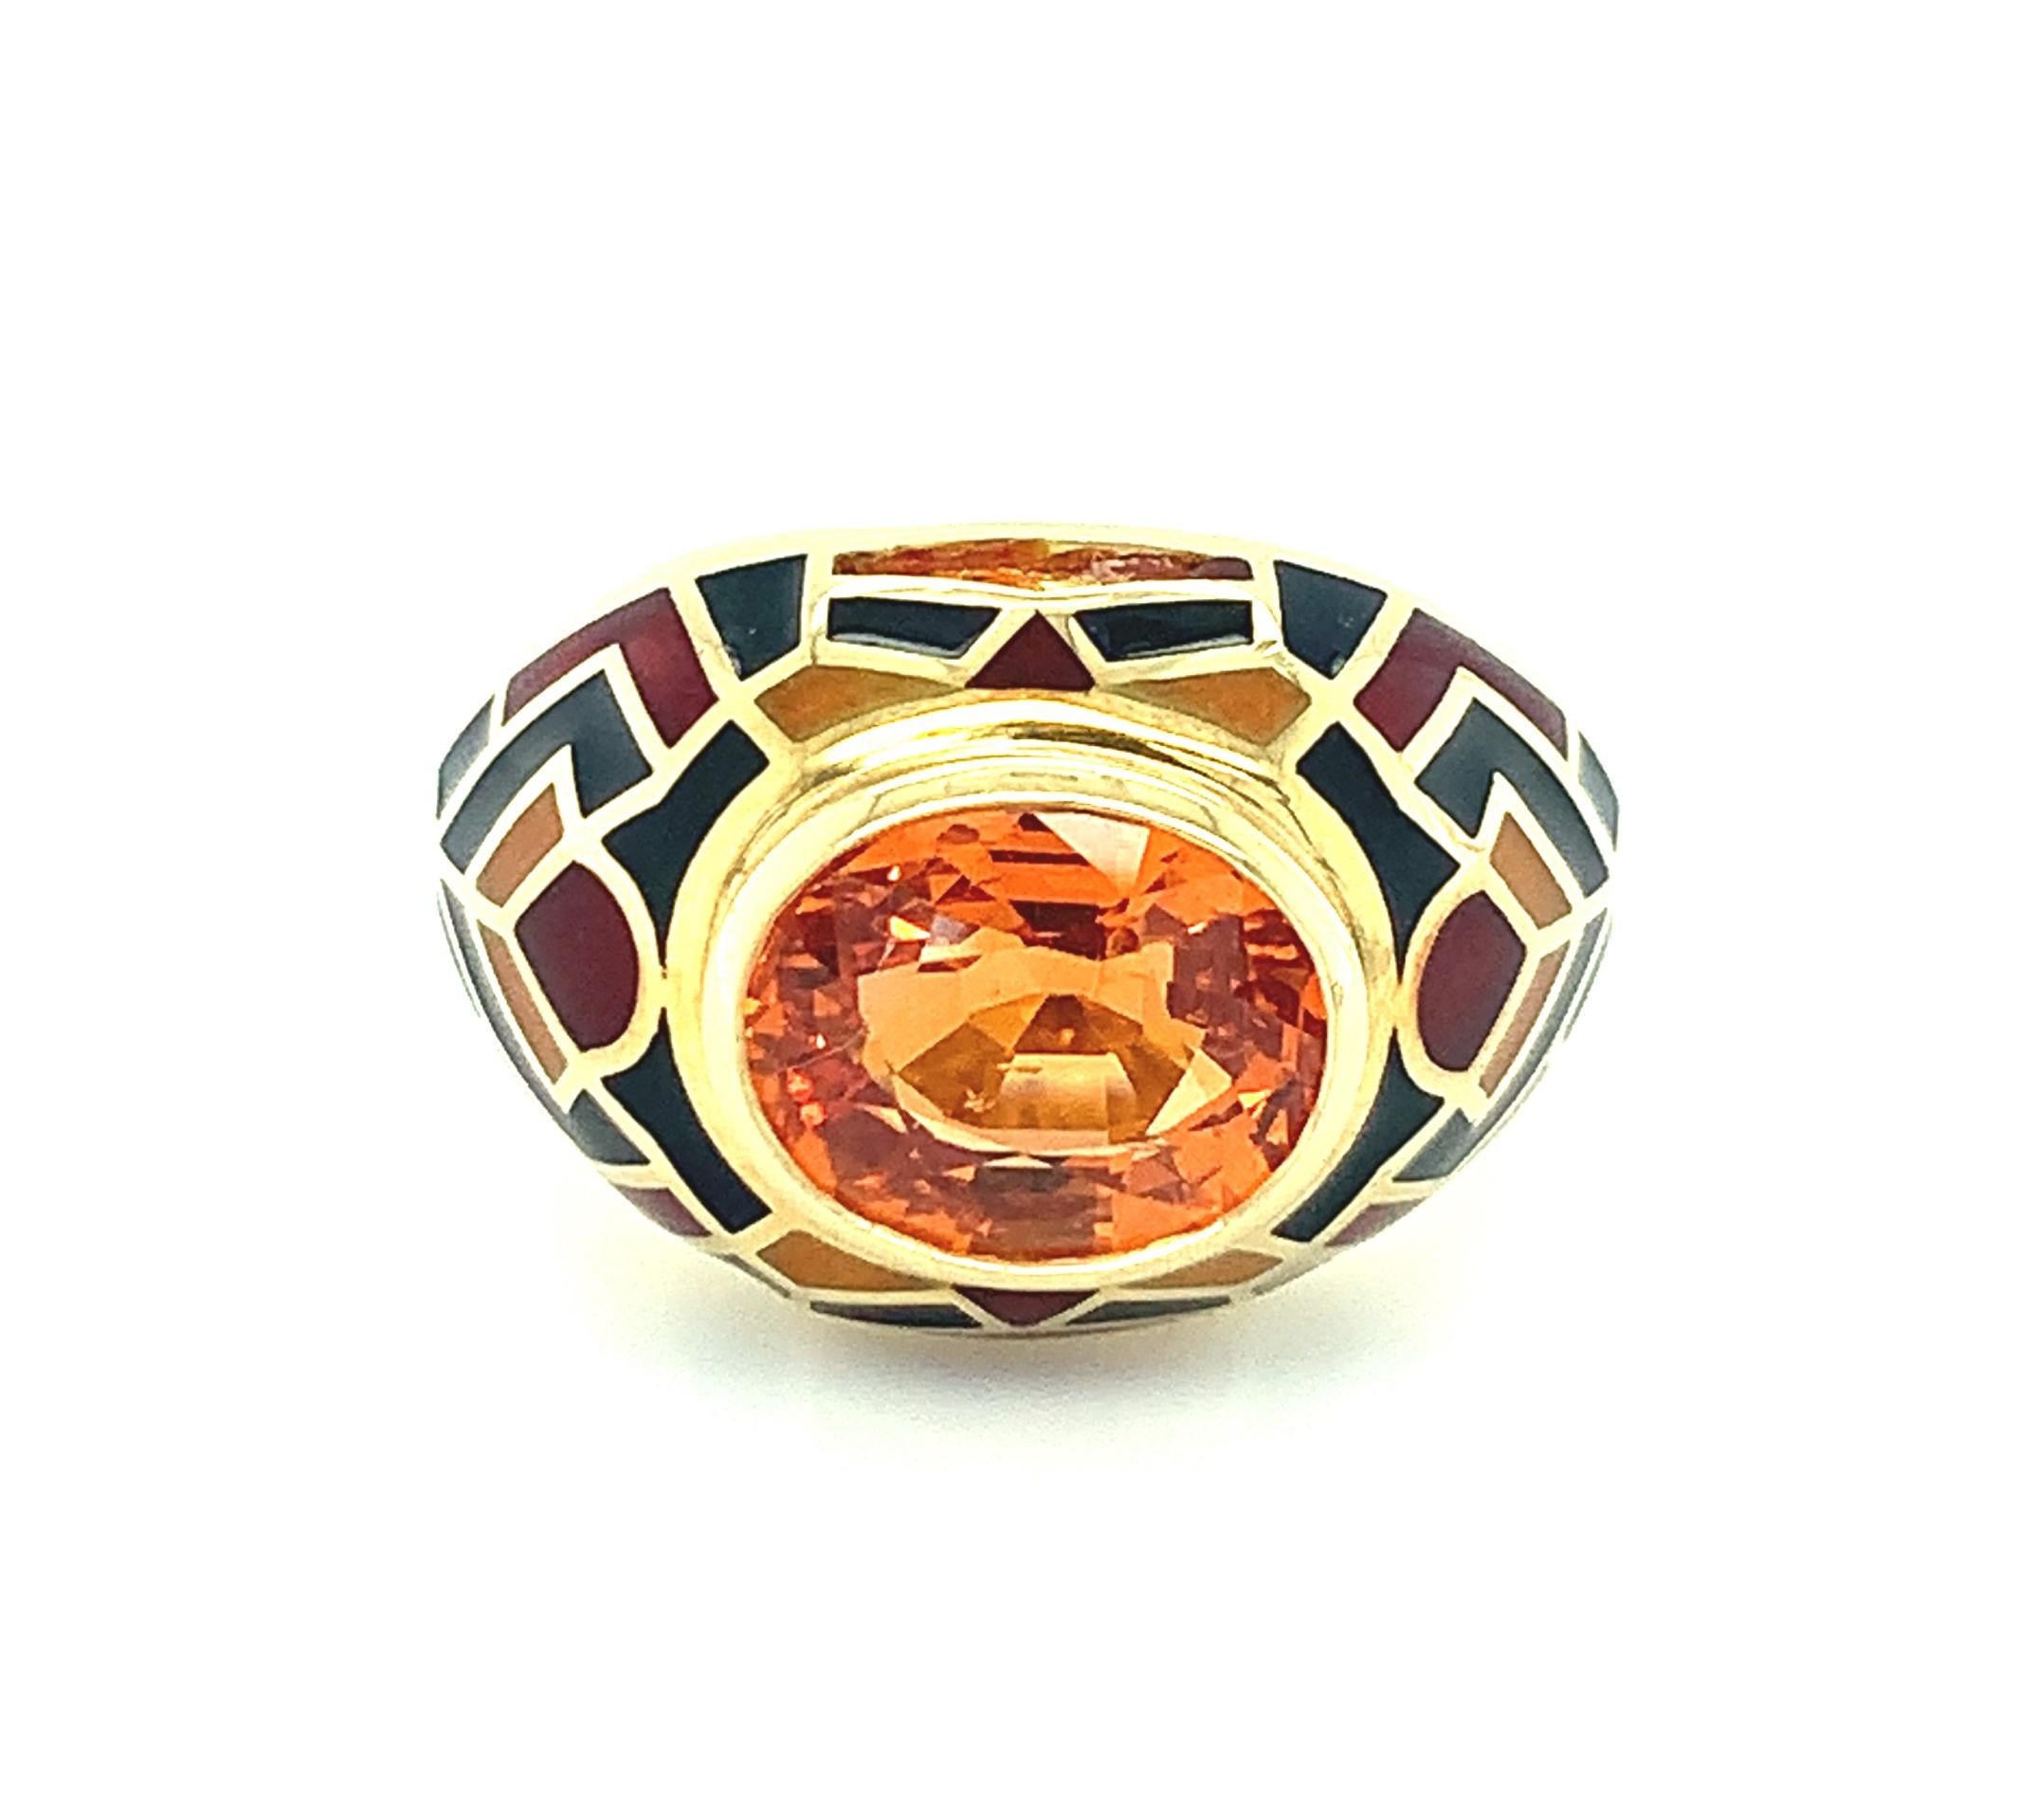 This stunning one-of-a-kind ring features a beautiful, bright, Mandarin orange spessartite garnet set 